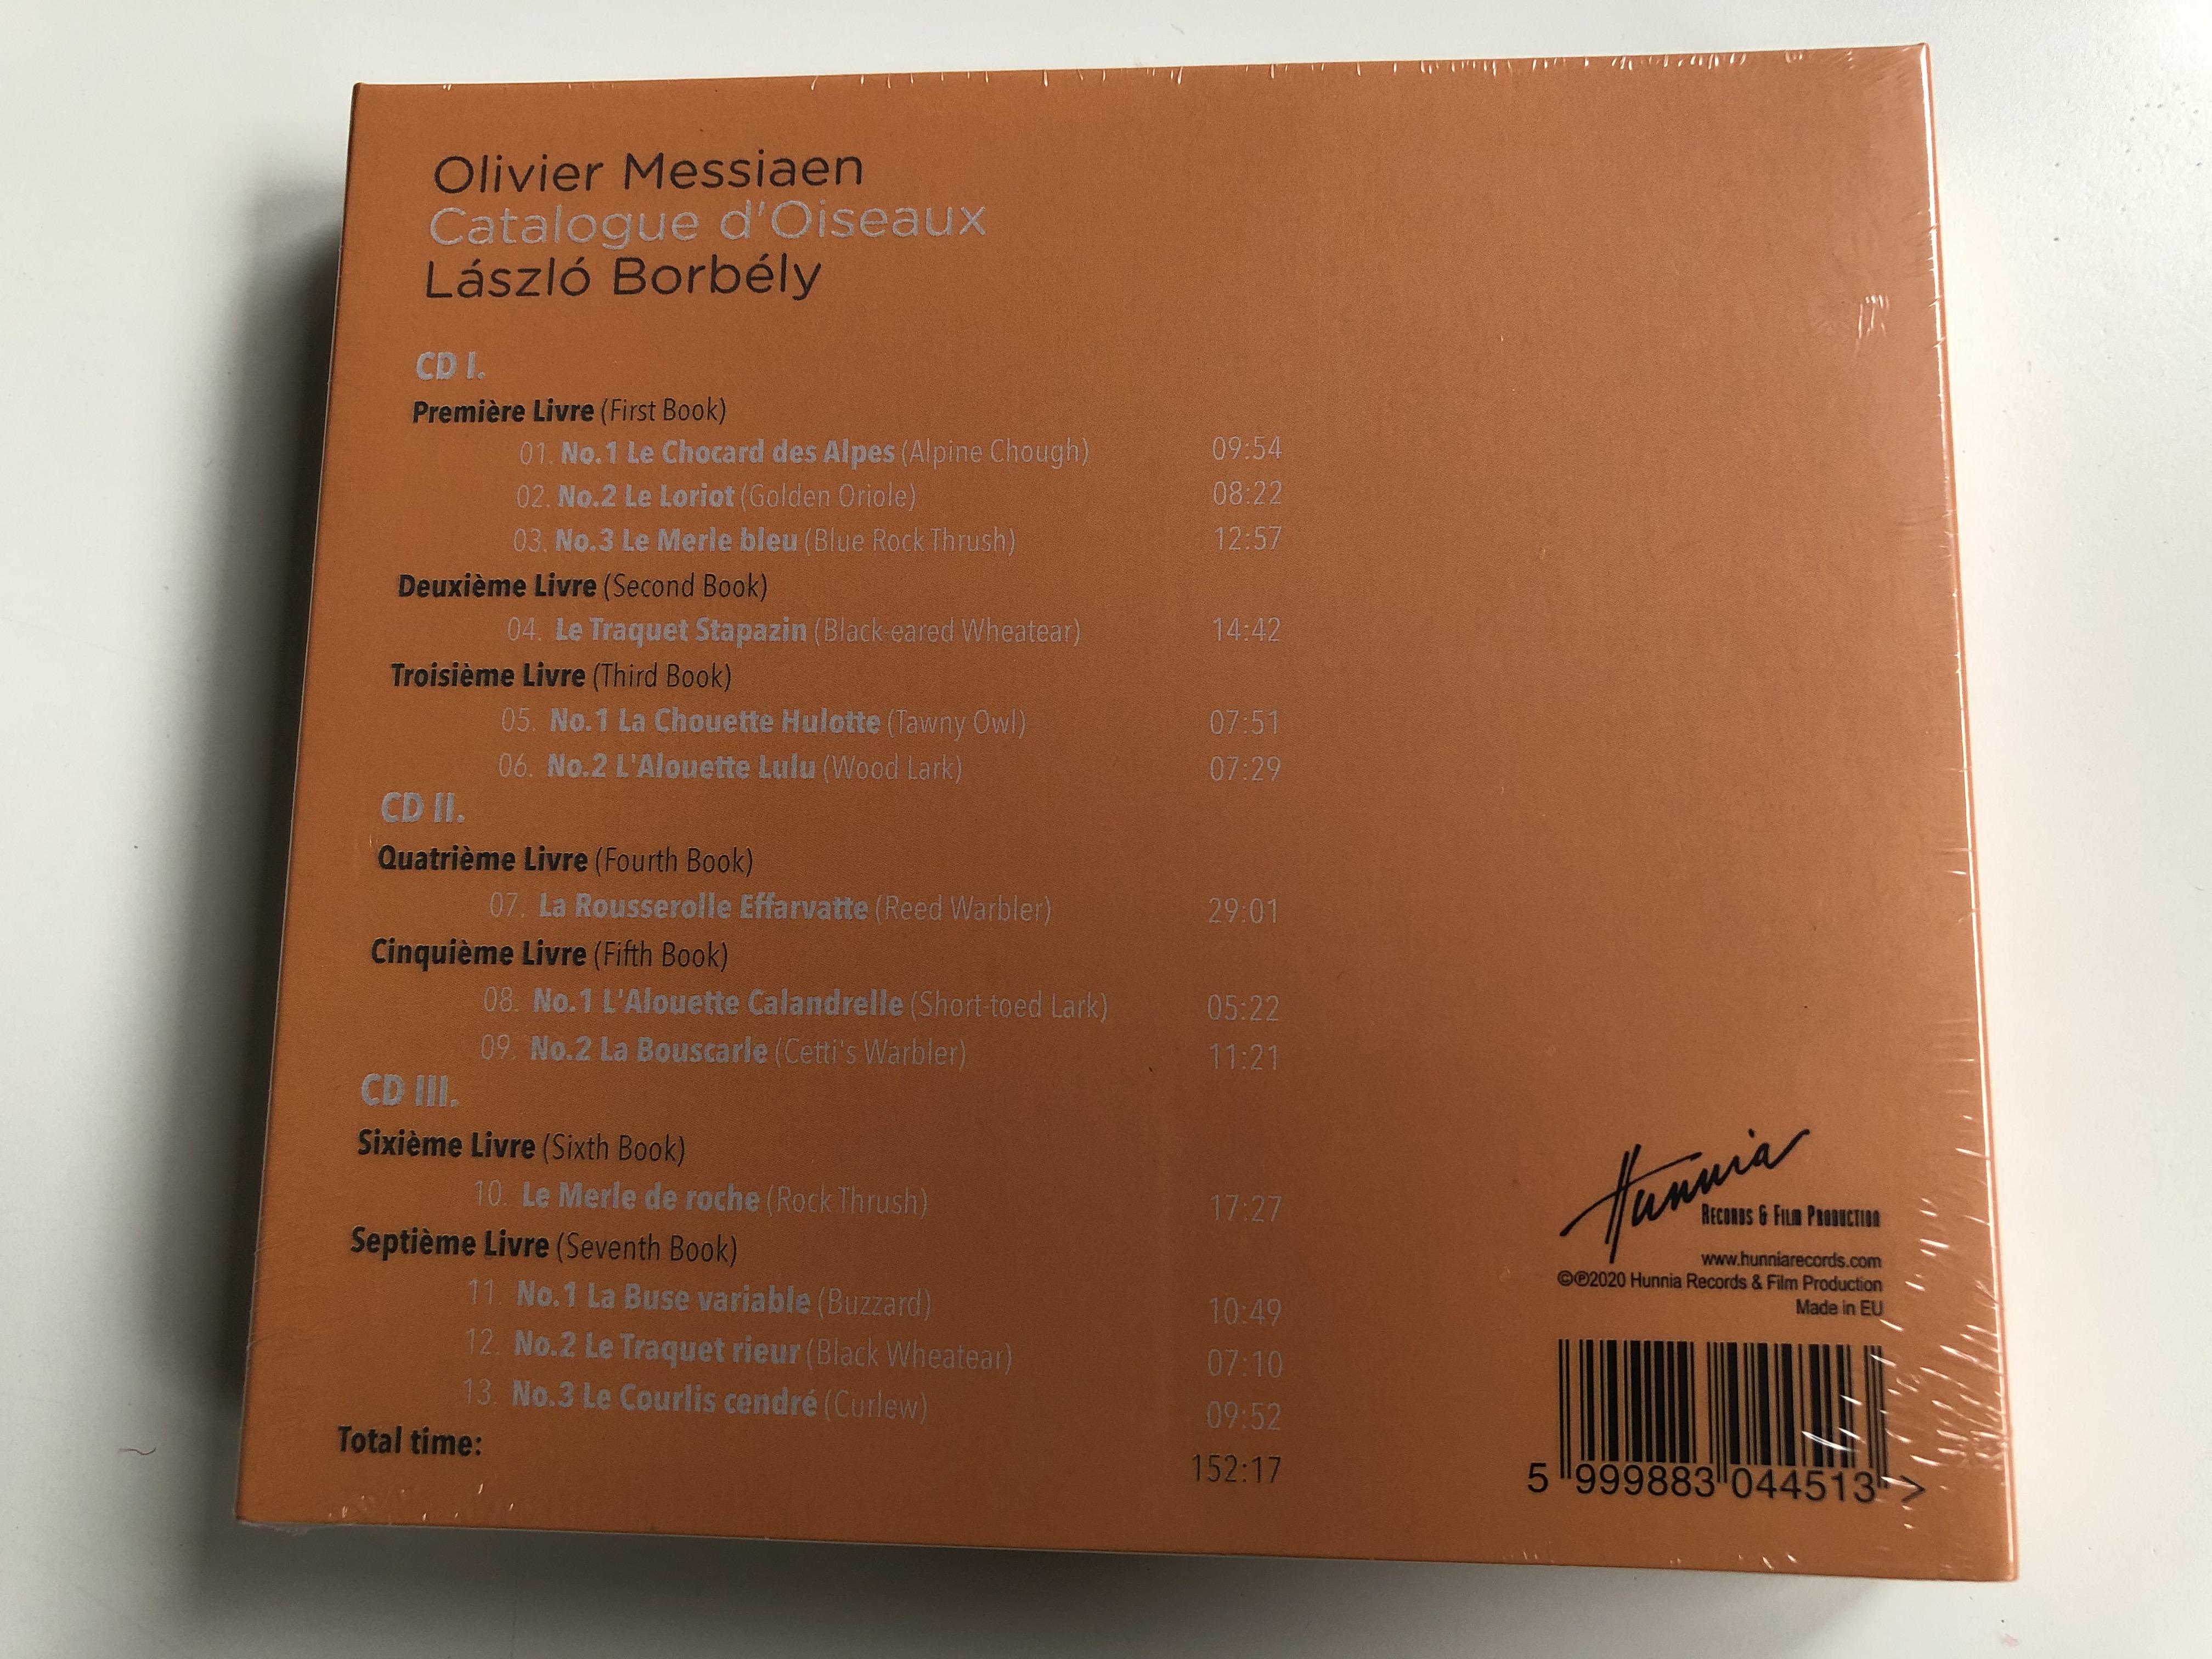 oliver-messiaen-catalogue-d-oiseaux-laszlo-borbely-hunnia-records-film-production-3x-audio-cd-2020-hrcd2008-2-.jpg